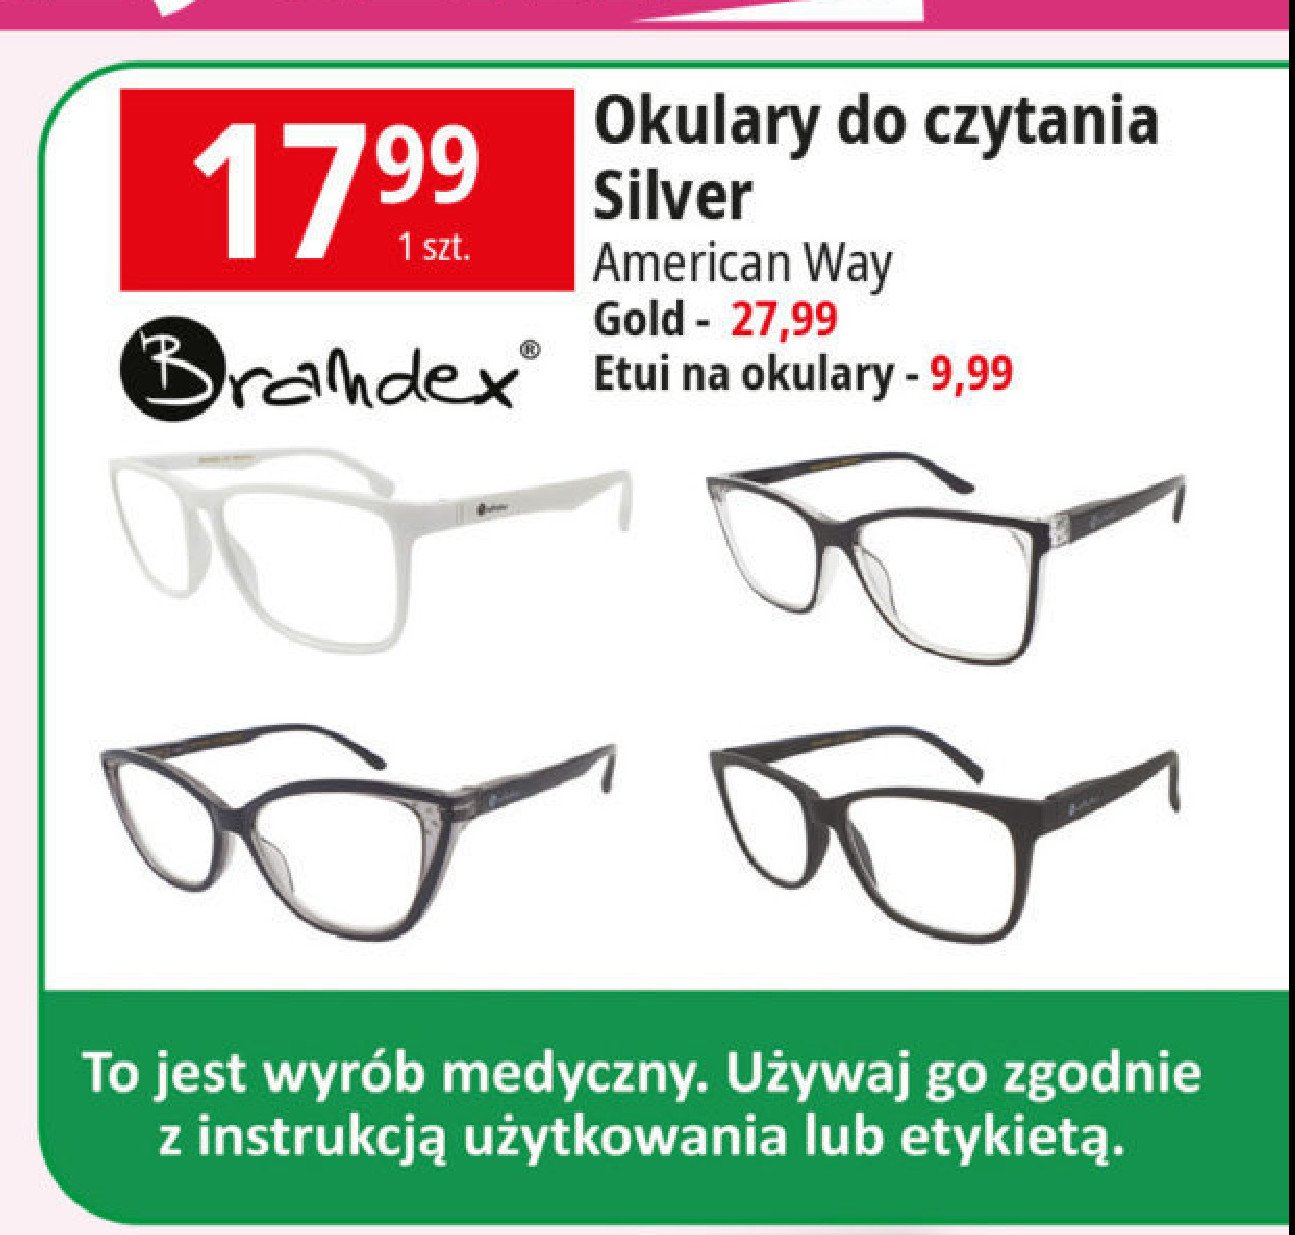 Okulary do czytania silver cool Brandex promocja